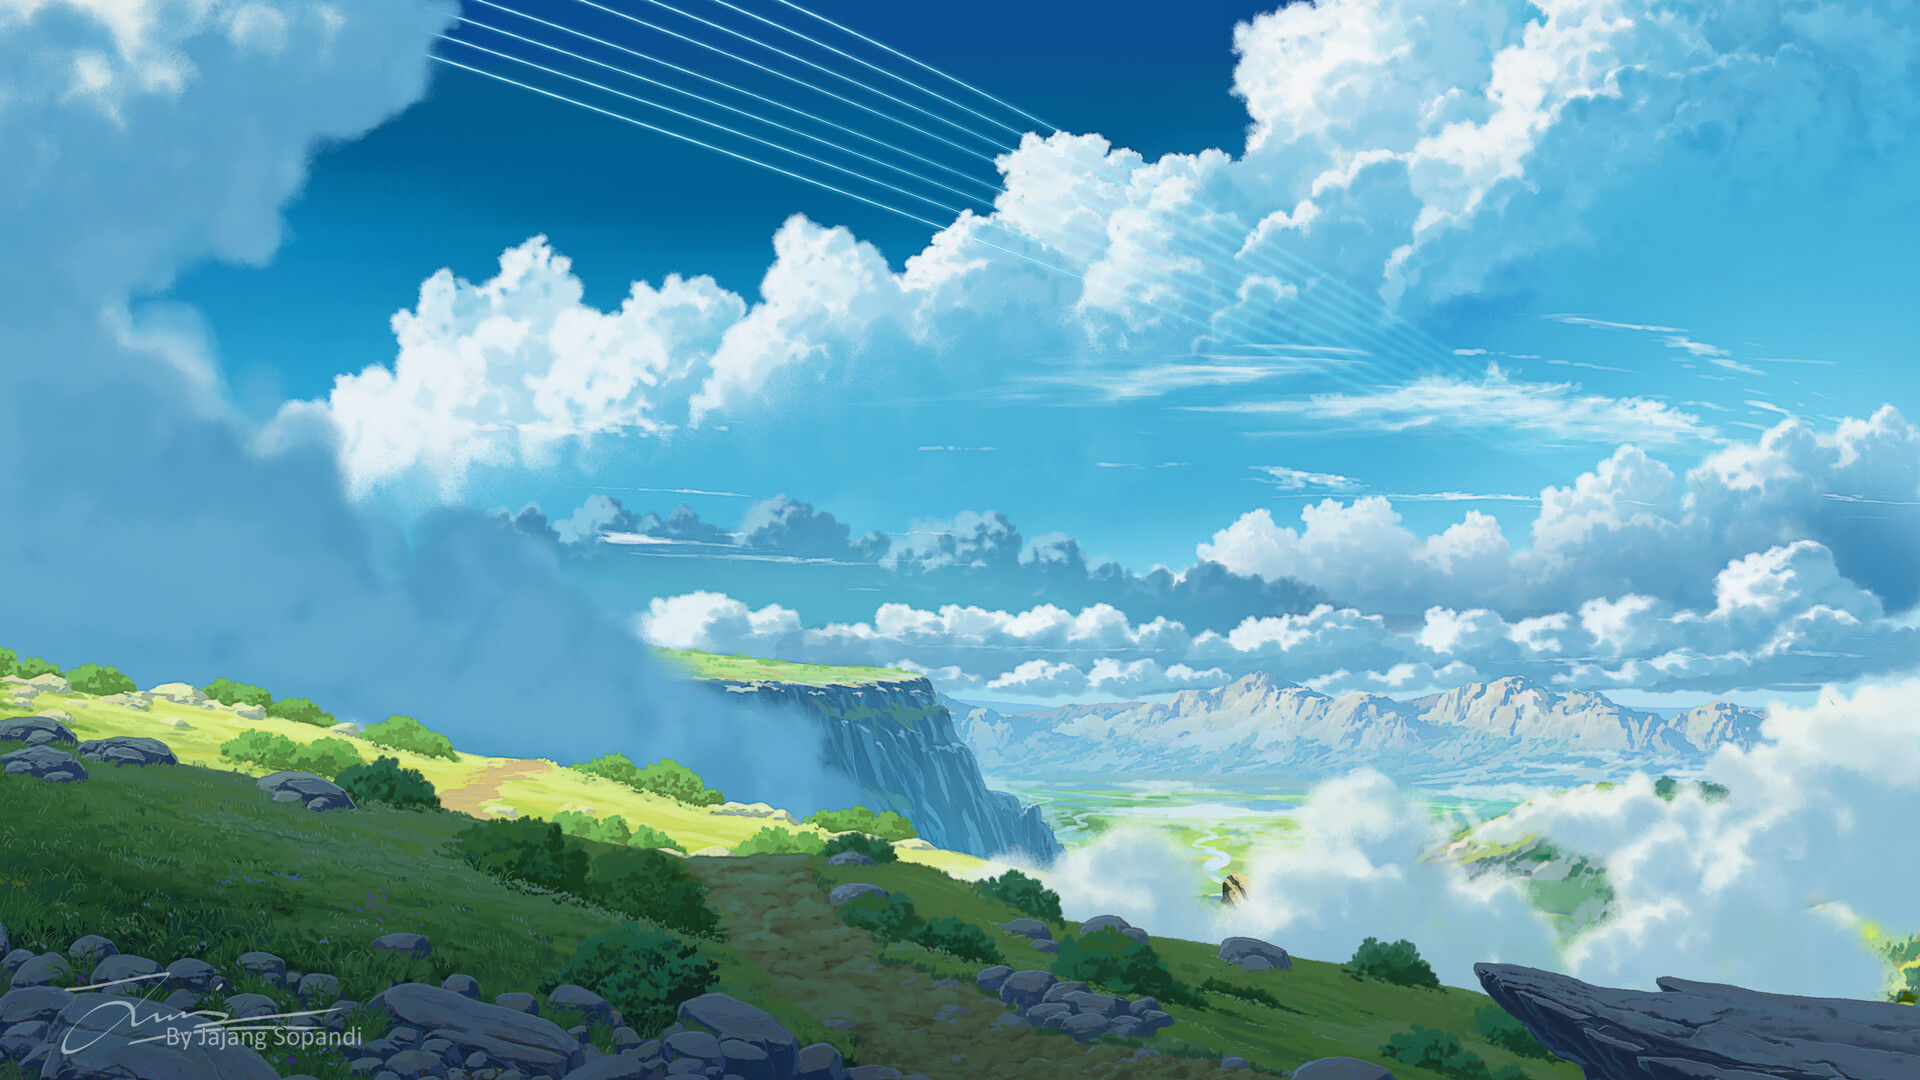 Anime 1920x1080 Jajang Sopandi landscape digital art clear sky clouds mountains anime sky ArtStation